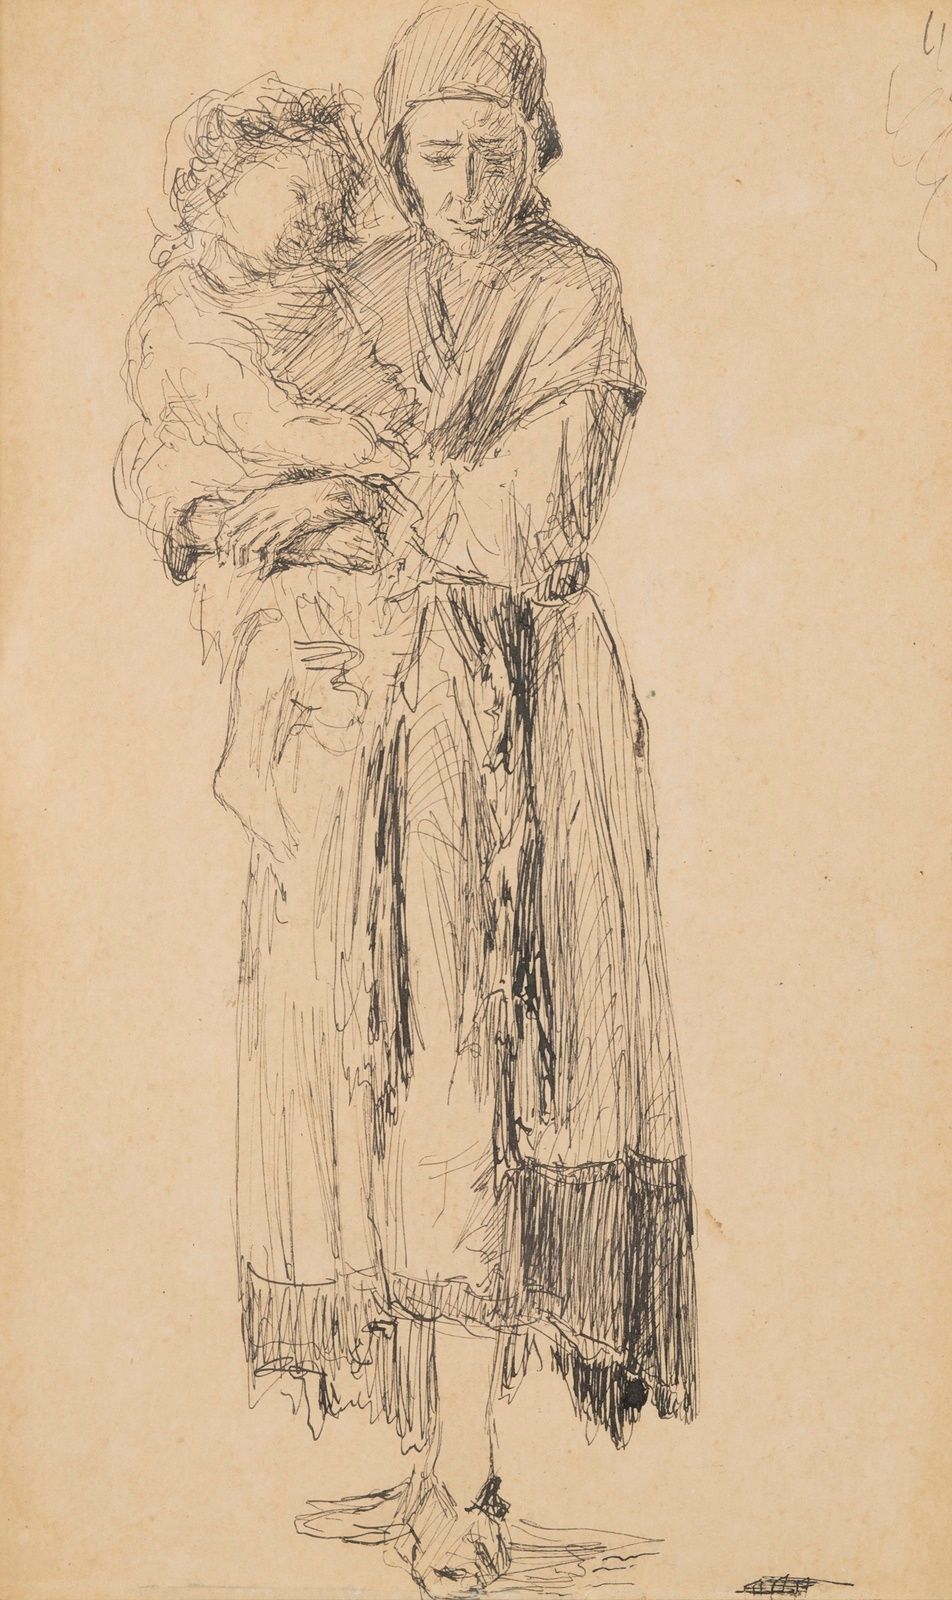 Null 19世纪的法国学校
女人和孩子
水墨
18 x 11 cm.